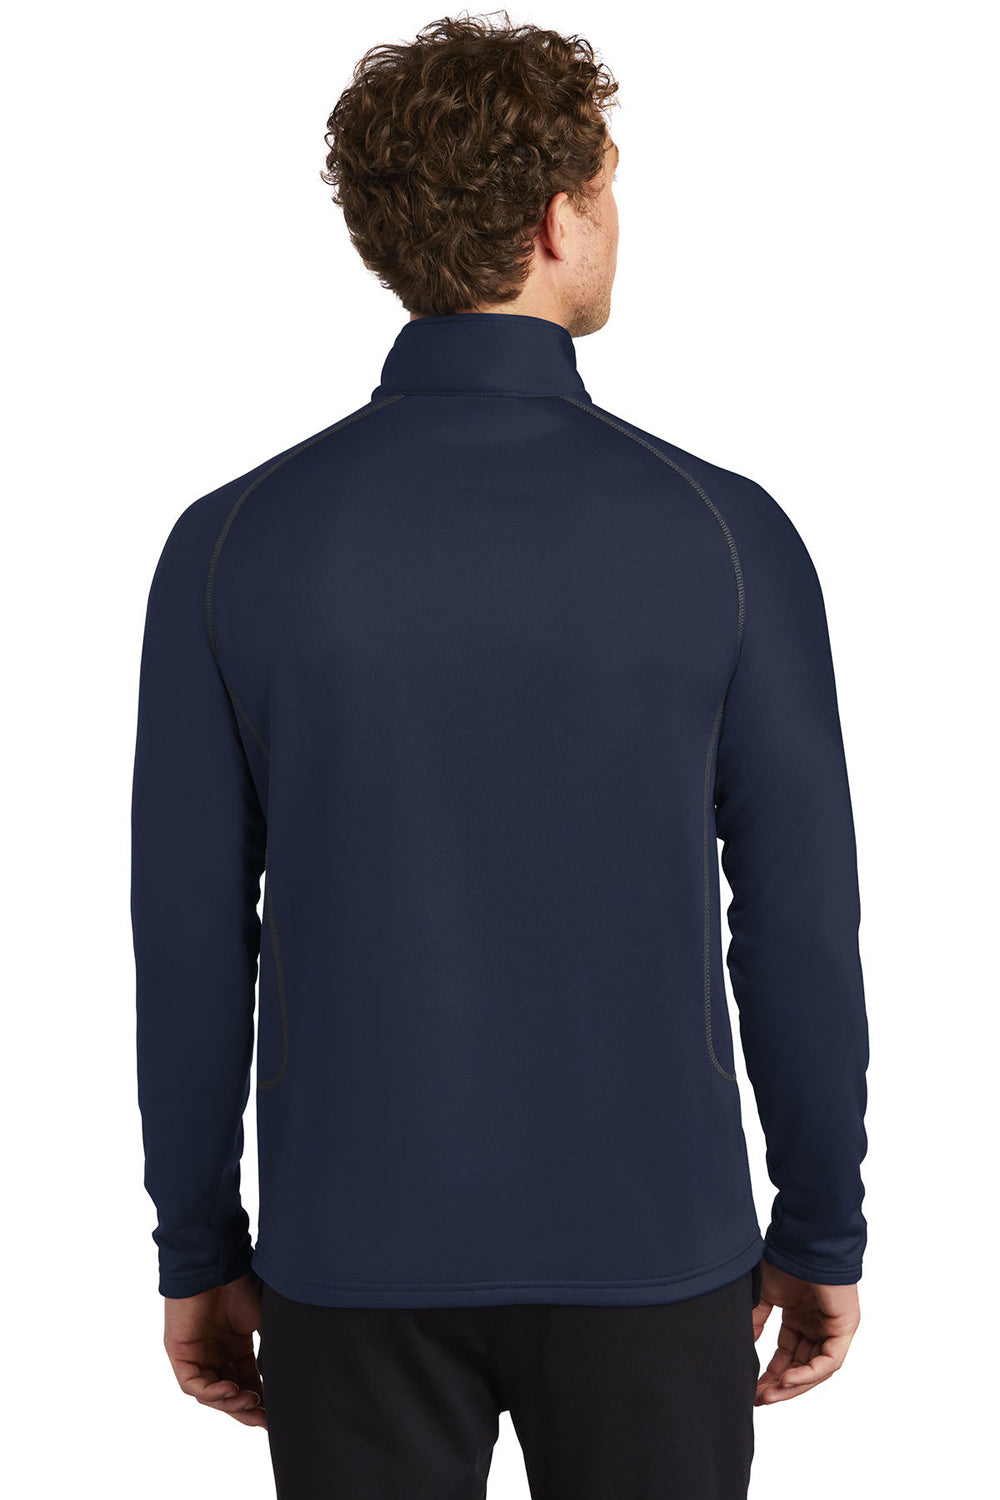 Eddie Bauer EB236 Mens Smooth Fleece 1/4 Zip Sweatshirt River Navy Blue Model Back